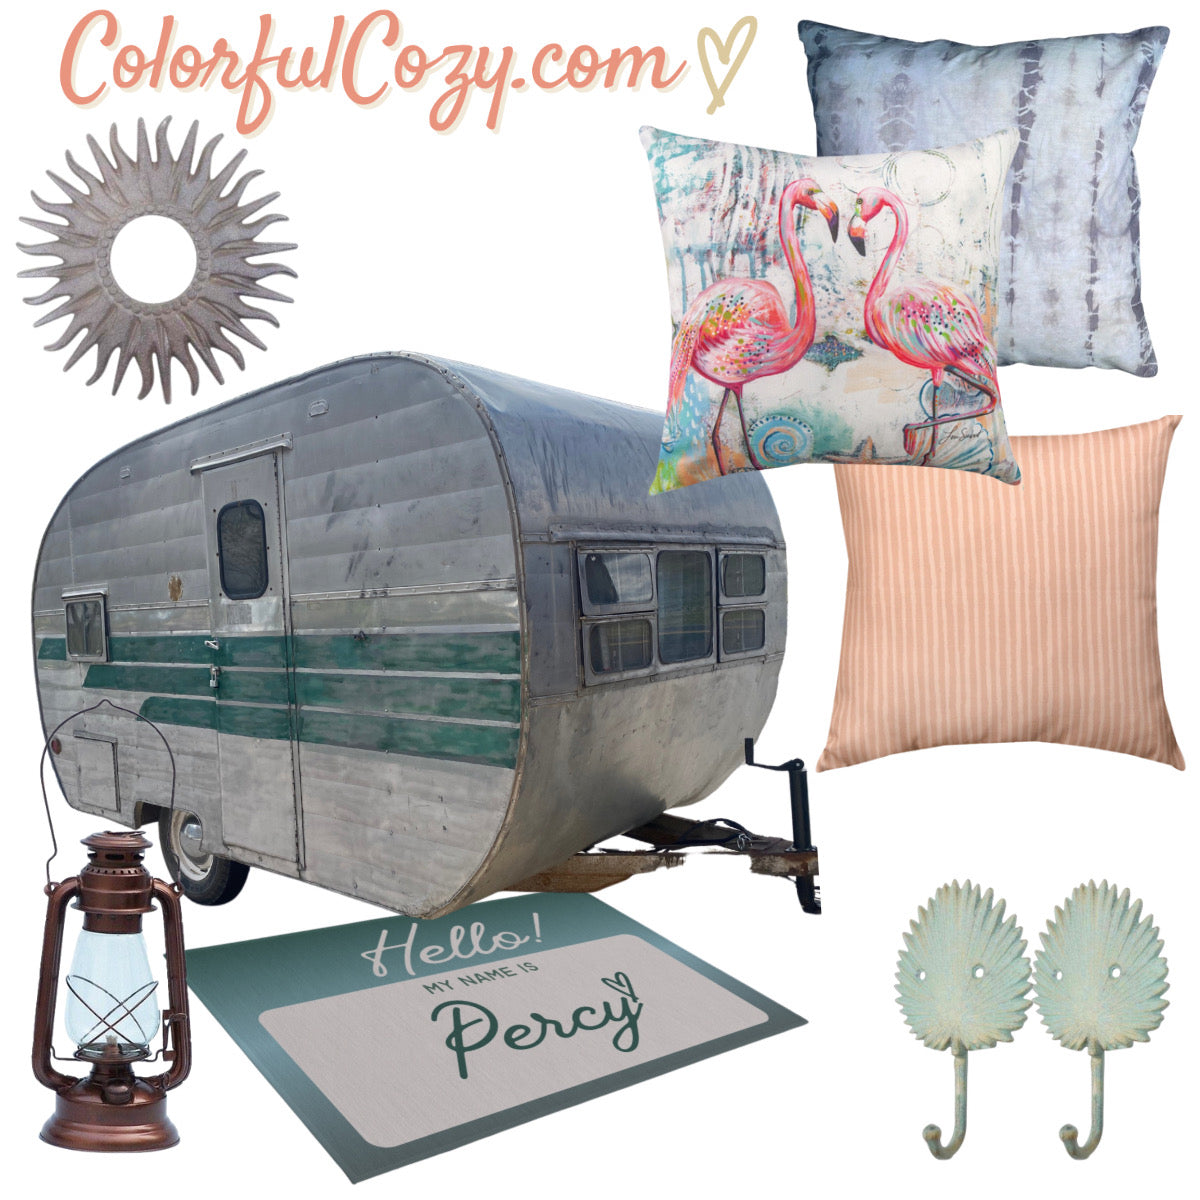 Custom Outdoor Rug for your Campervan, RV, Vintage Trailer, Campsite, Glamping